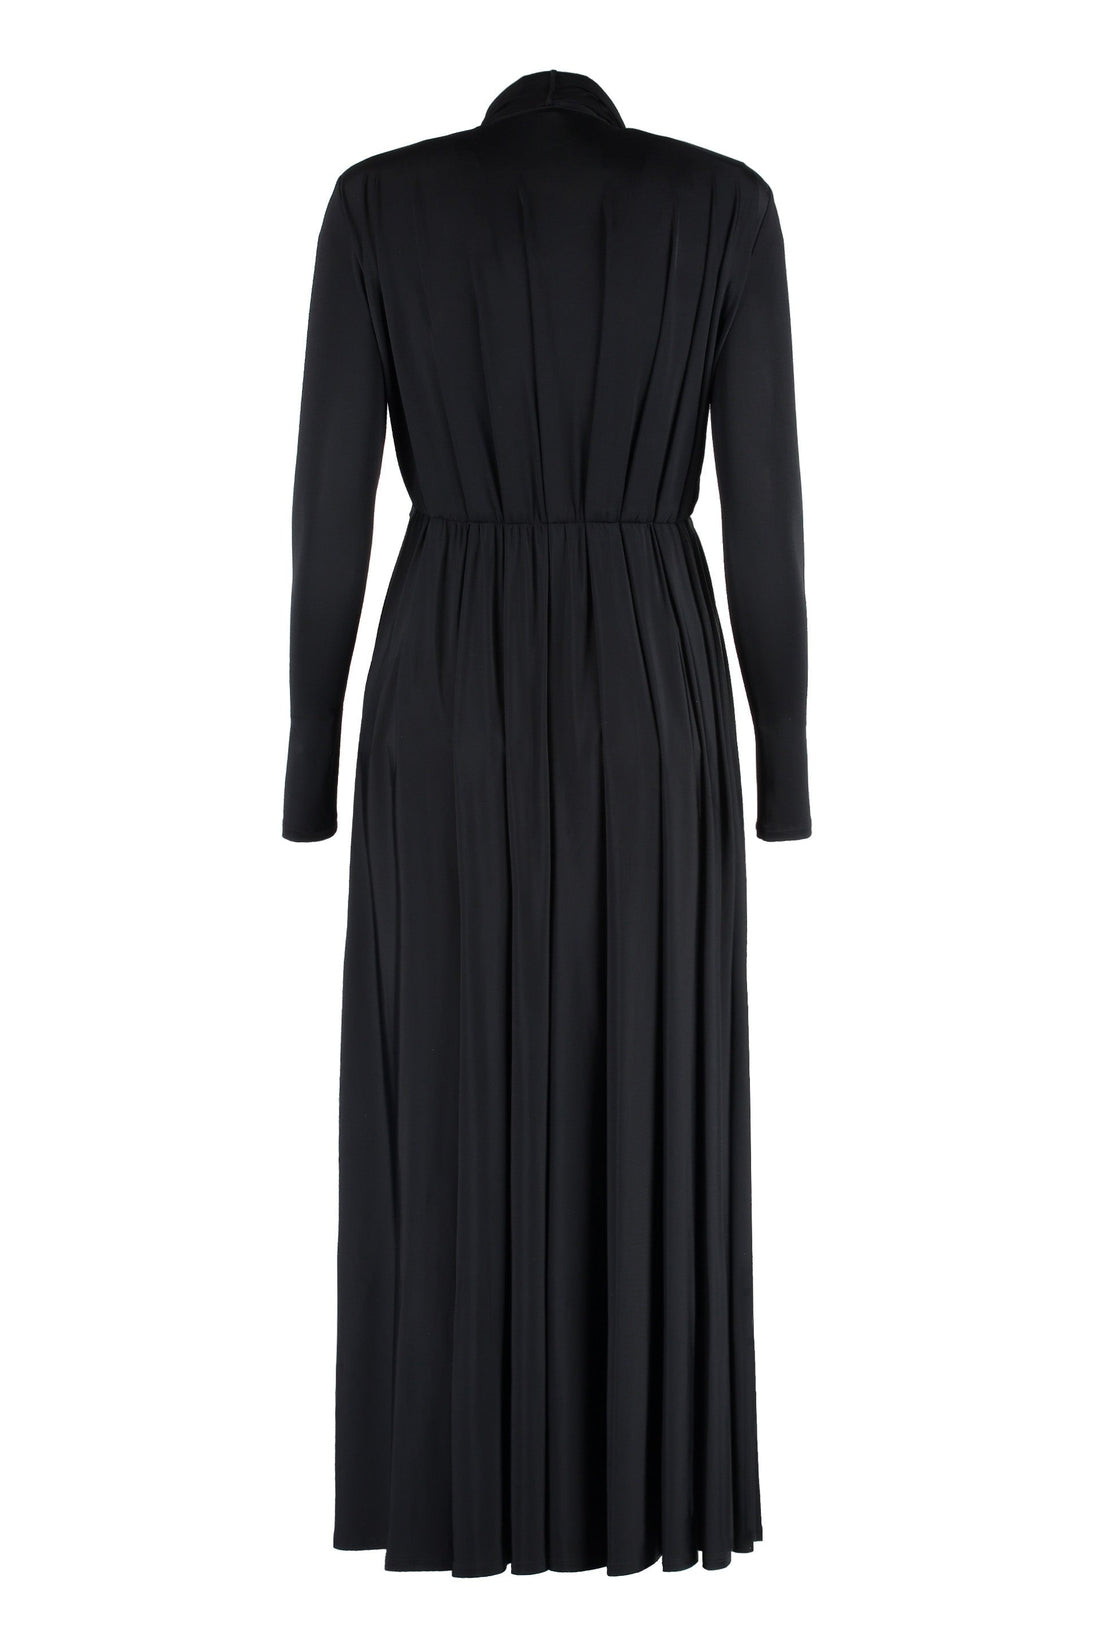 Balenciaga-OUTLET-SALE-Draped jersey long dress-ARCHIVIST